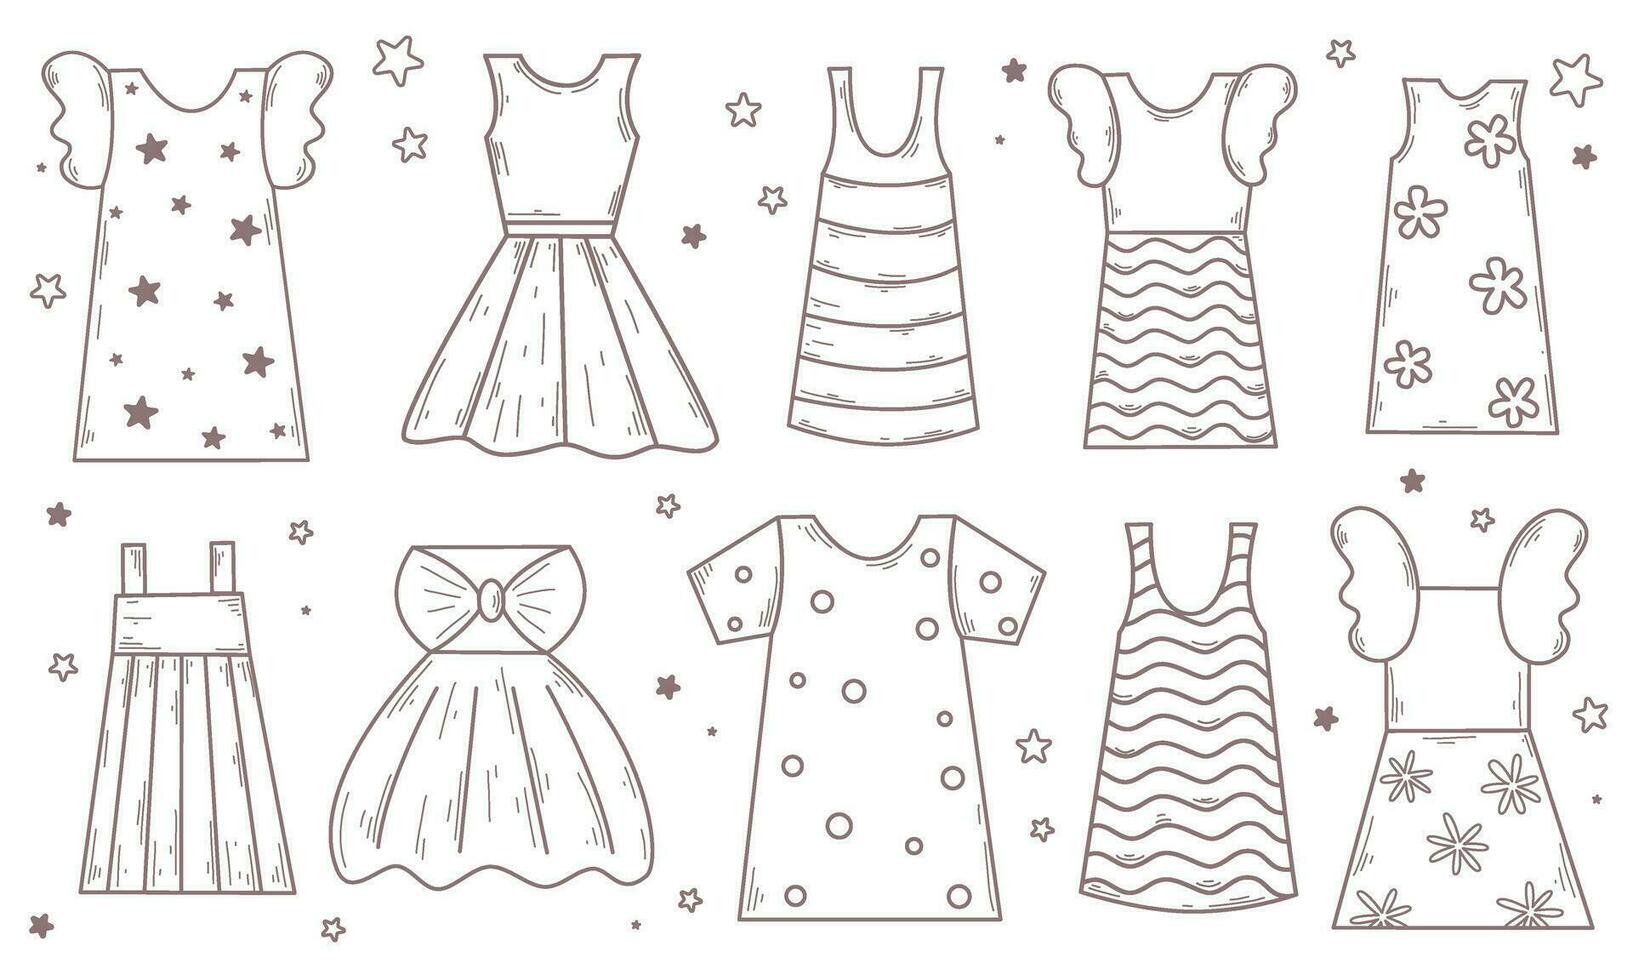 Girl's wardrobe set doodle sketch style vector